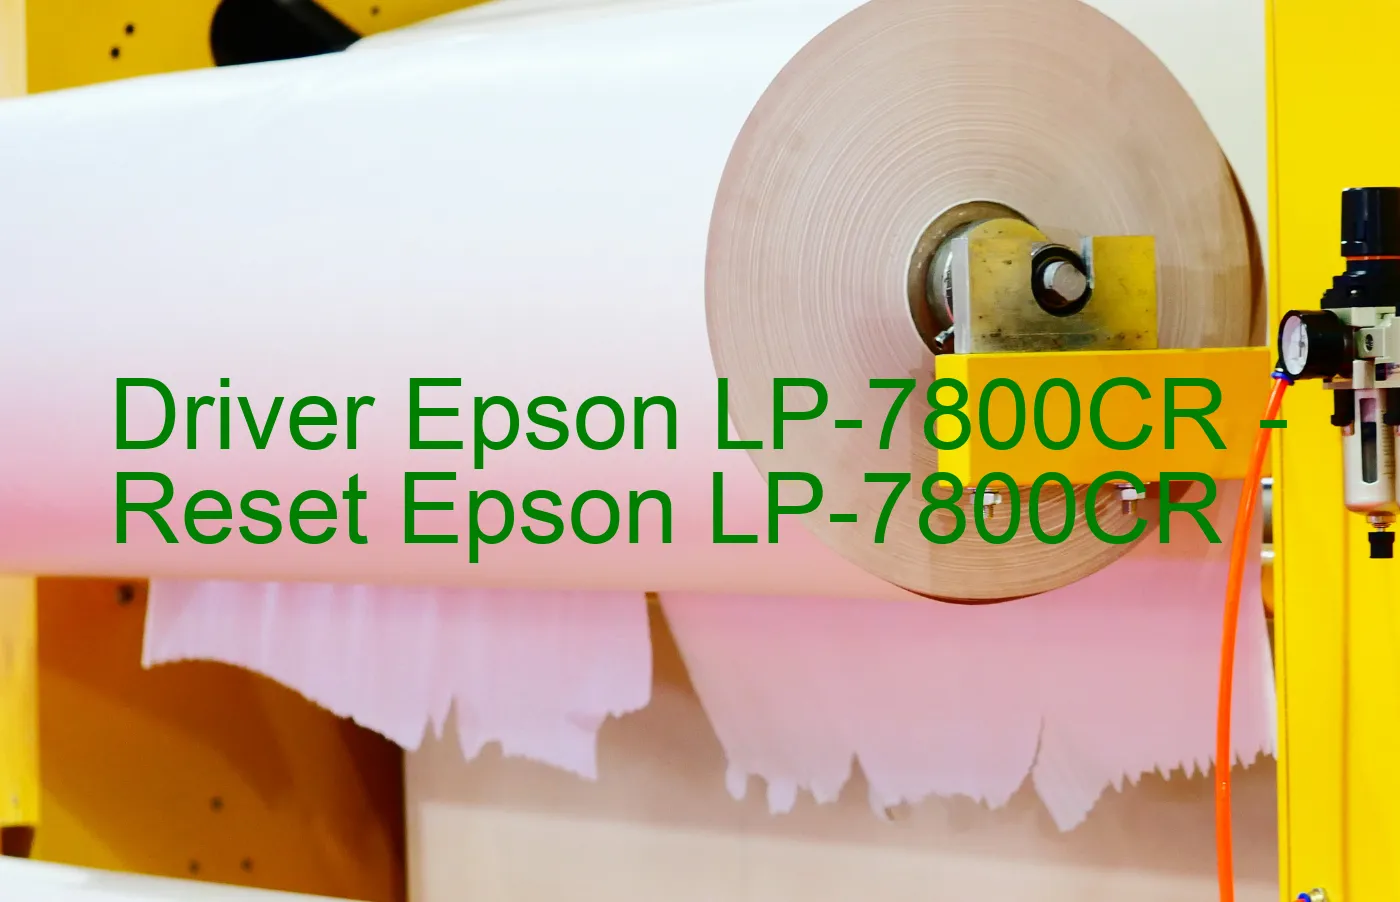 Epson LP-7800CRのドライバー、Epson LP-7800CRのリセットソフトウェア